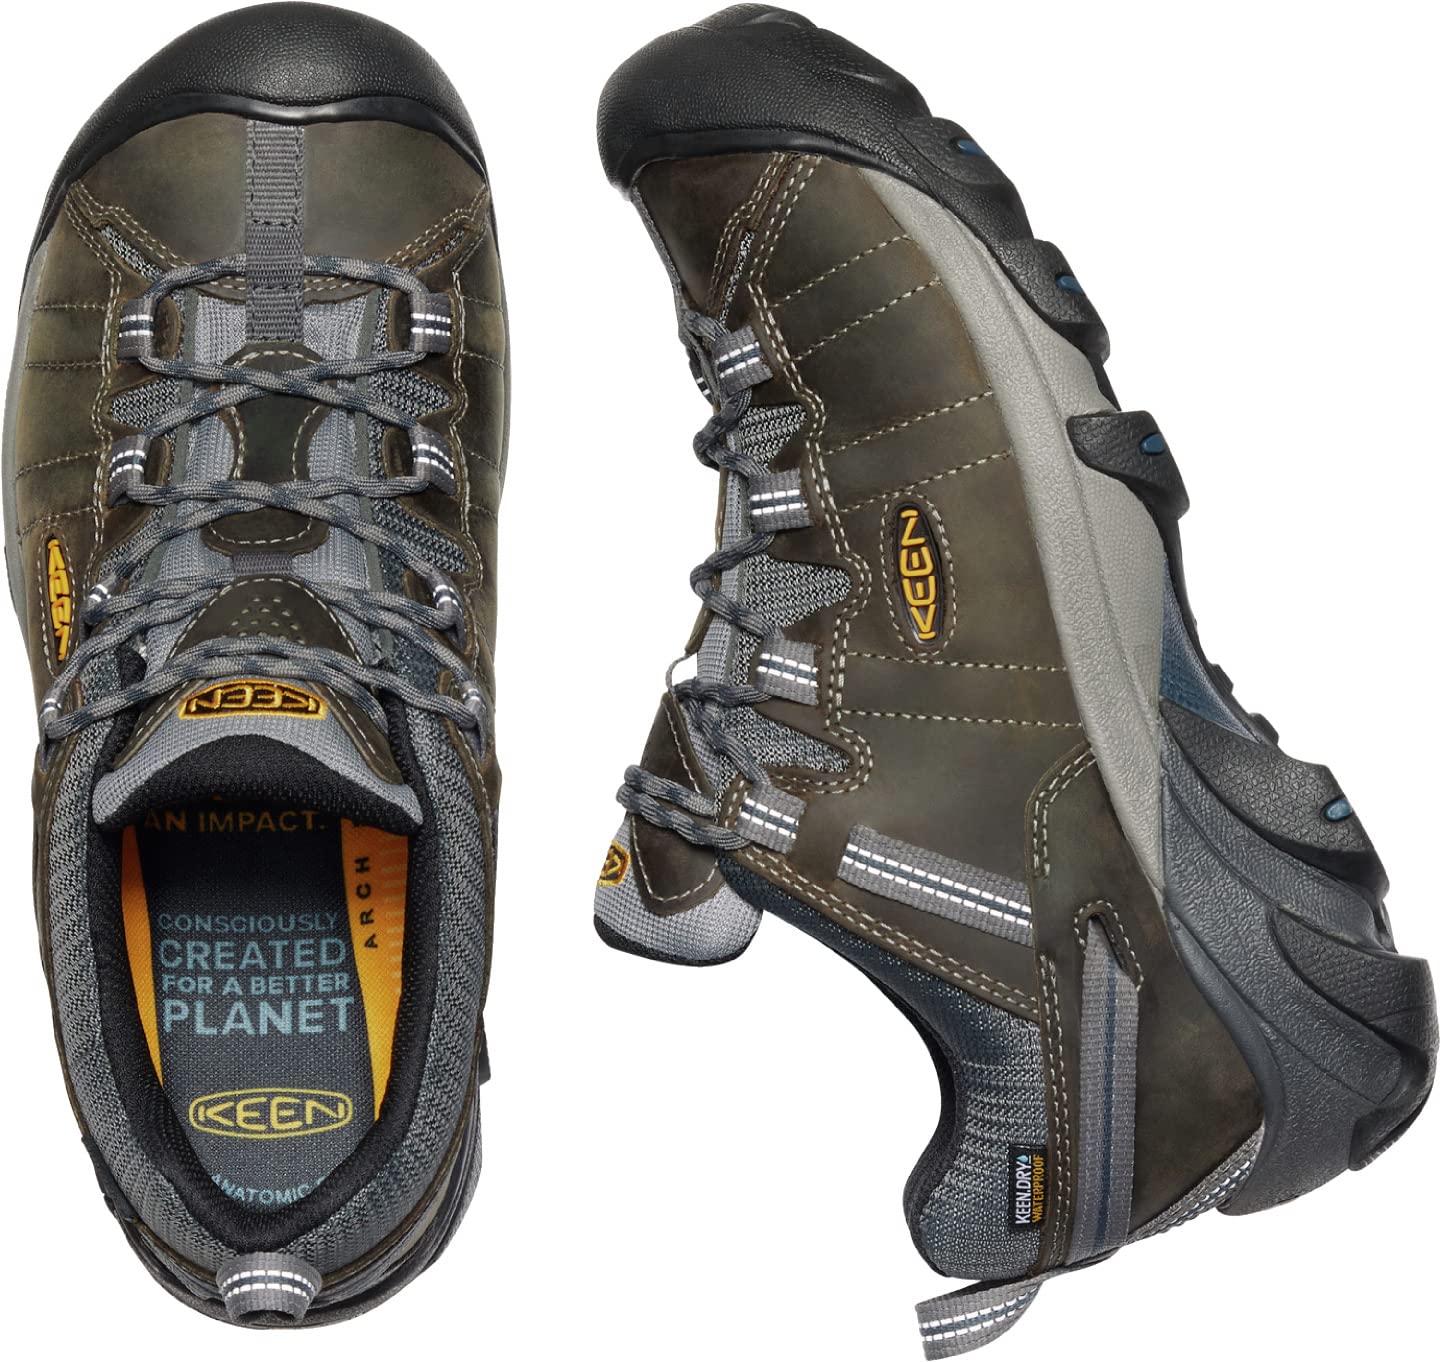 KEEN Men's Targhee 2 Low Height Waterproof Hiking Shoes